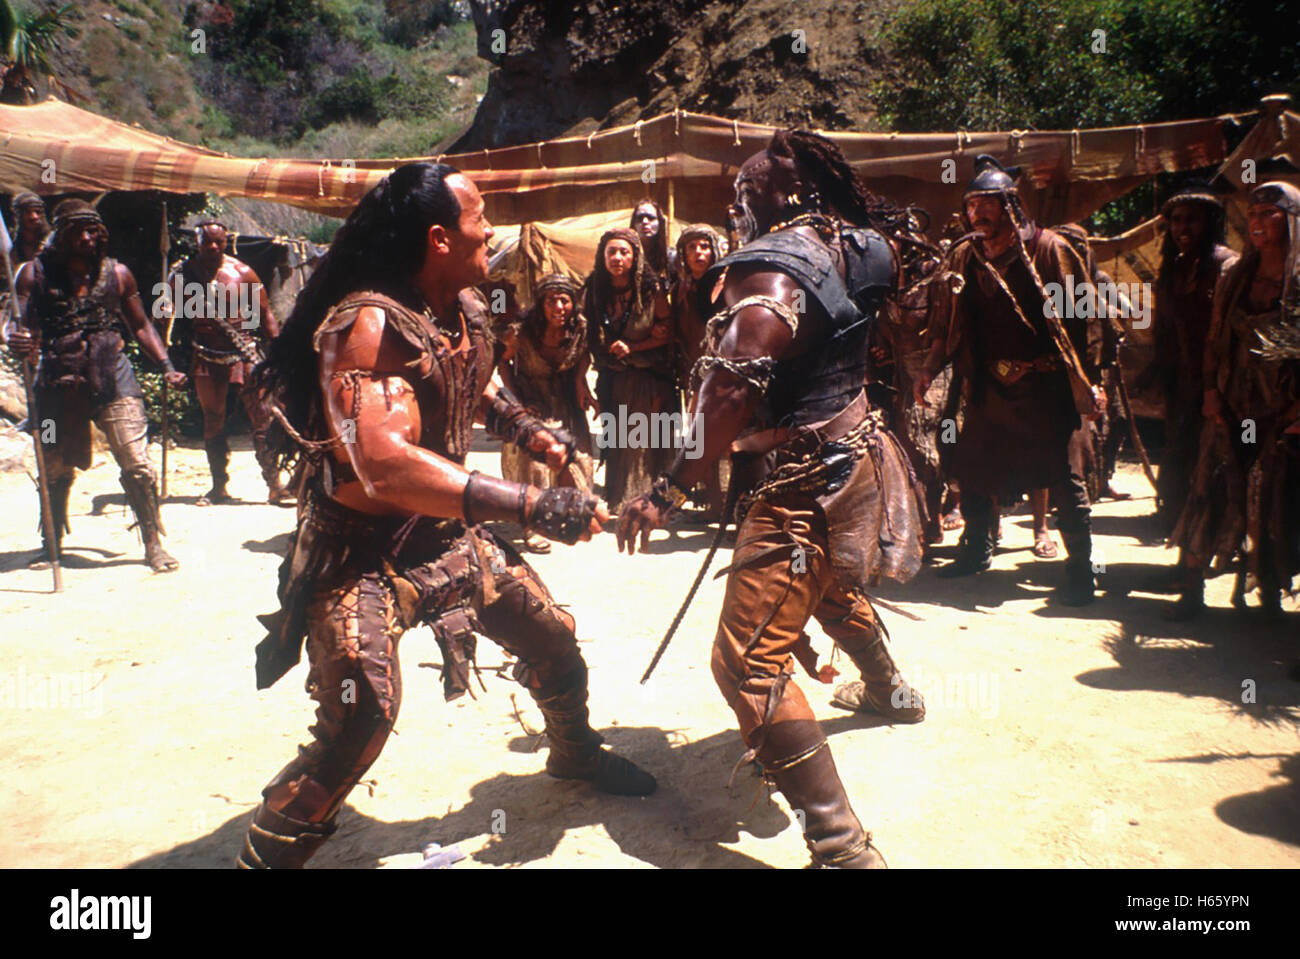 The Scorpion King (2002), Director: Chuck Russell, Actors/Stars: Dwayne Johnson (The Rock), Steven Brand, Michael Clarke Duncan Stock Photo